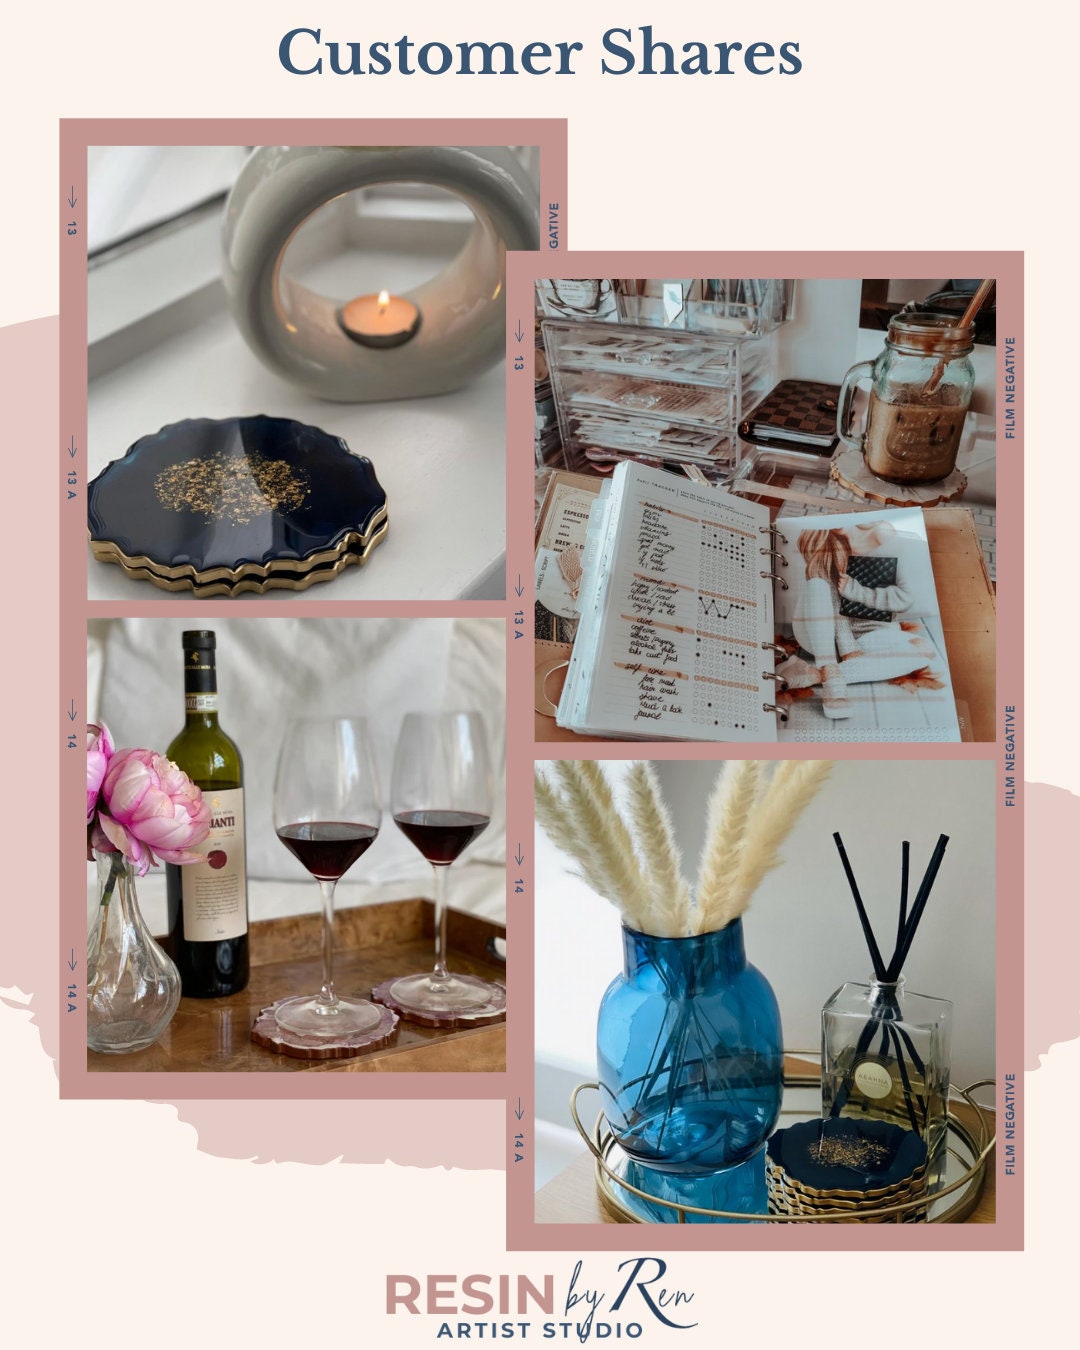 Royal Blue & Gold Coaster Set 2 / Handmade Resin Agate Slice / Gold Stones / Gift Idea for Bedroom Decor